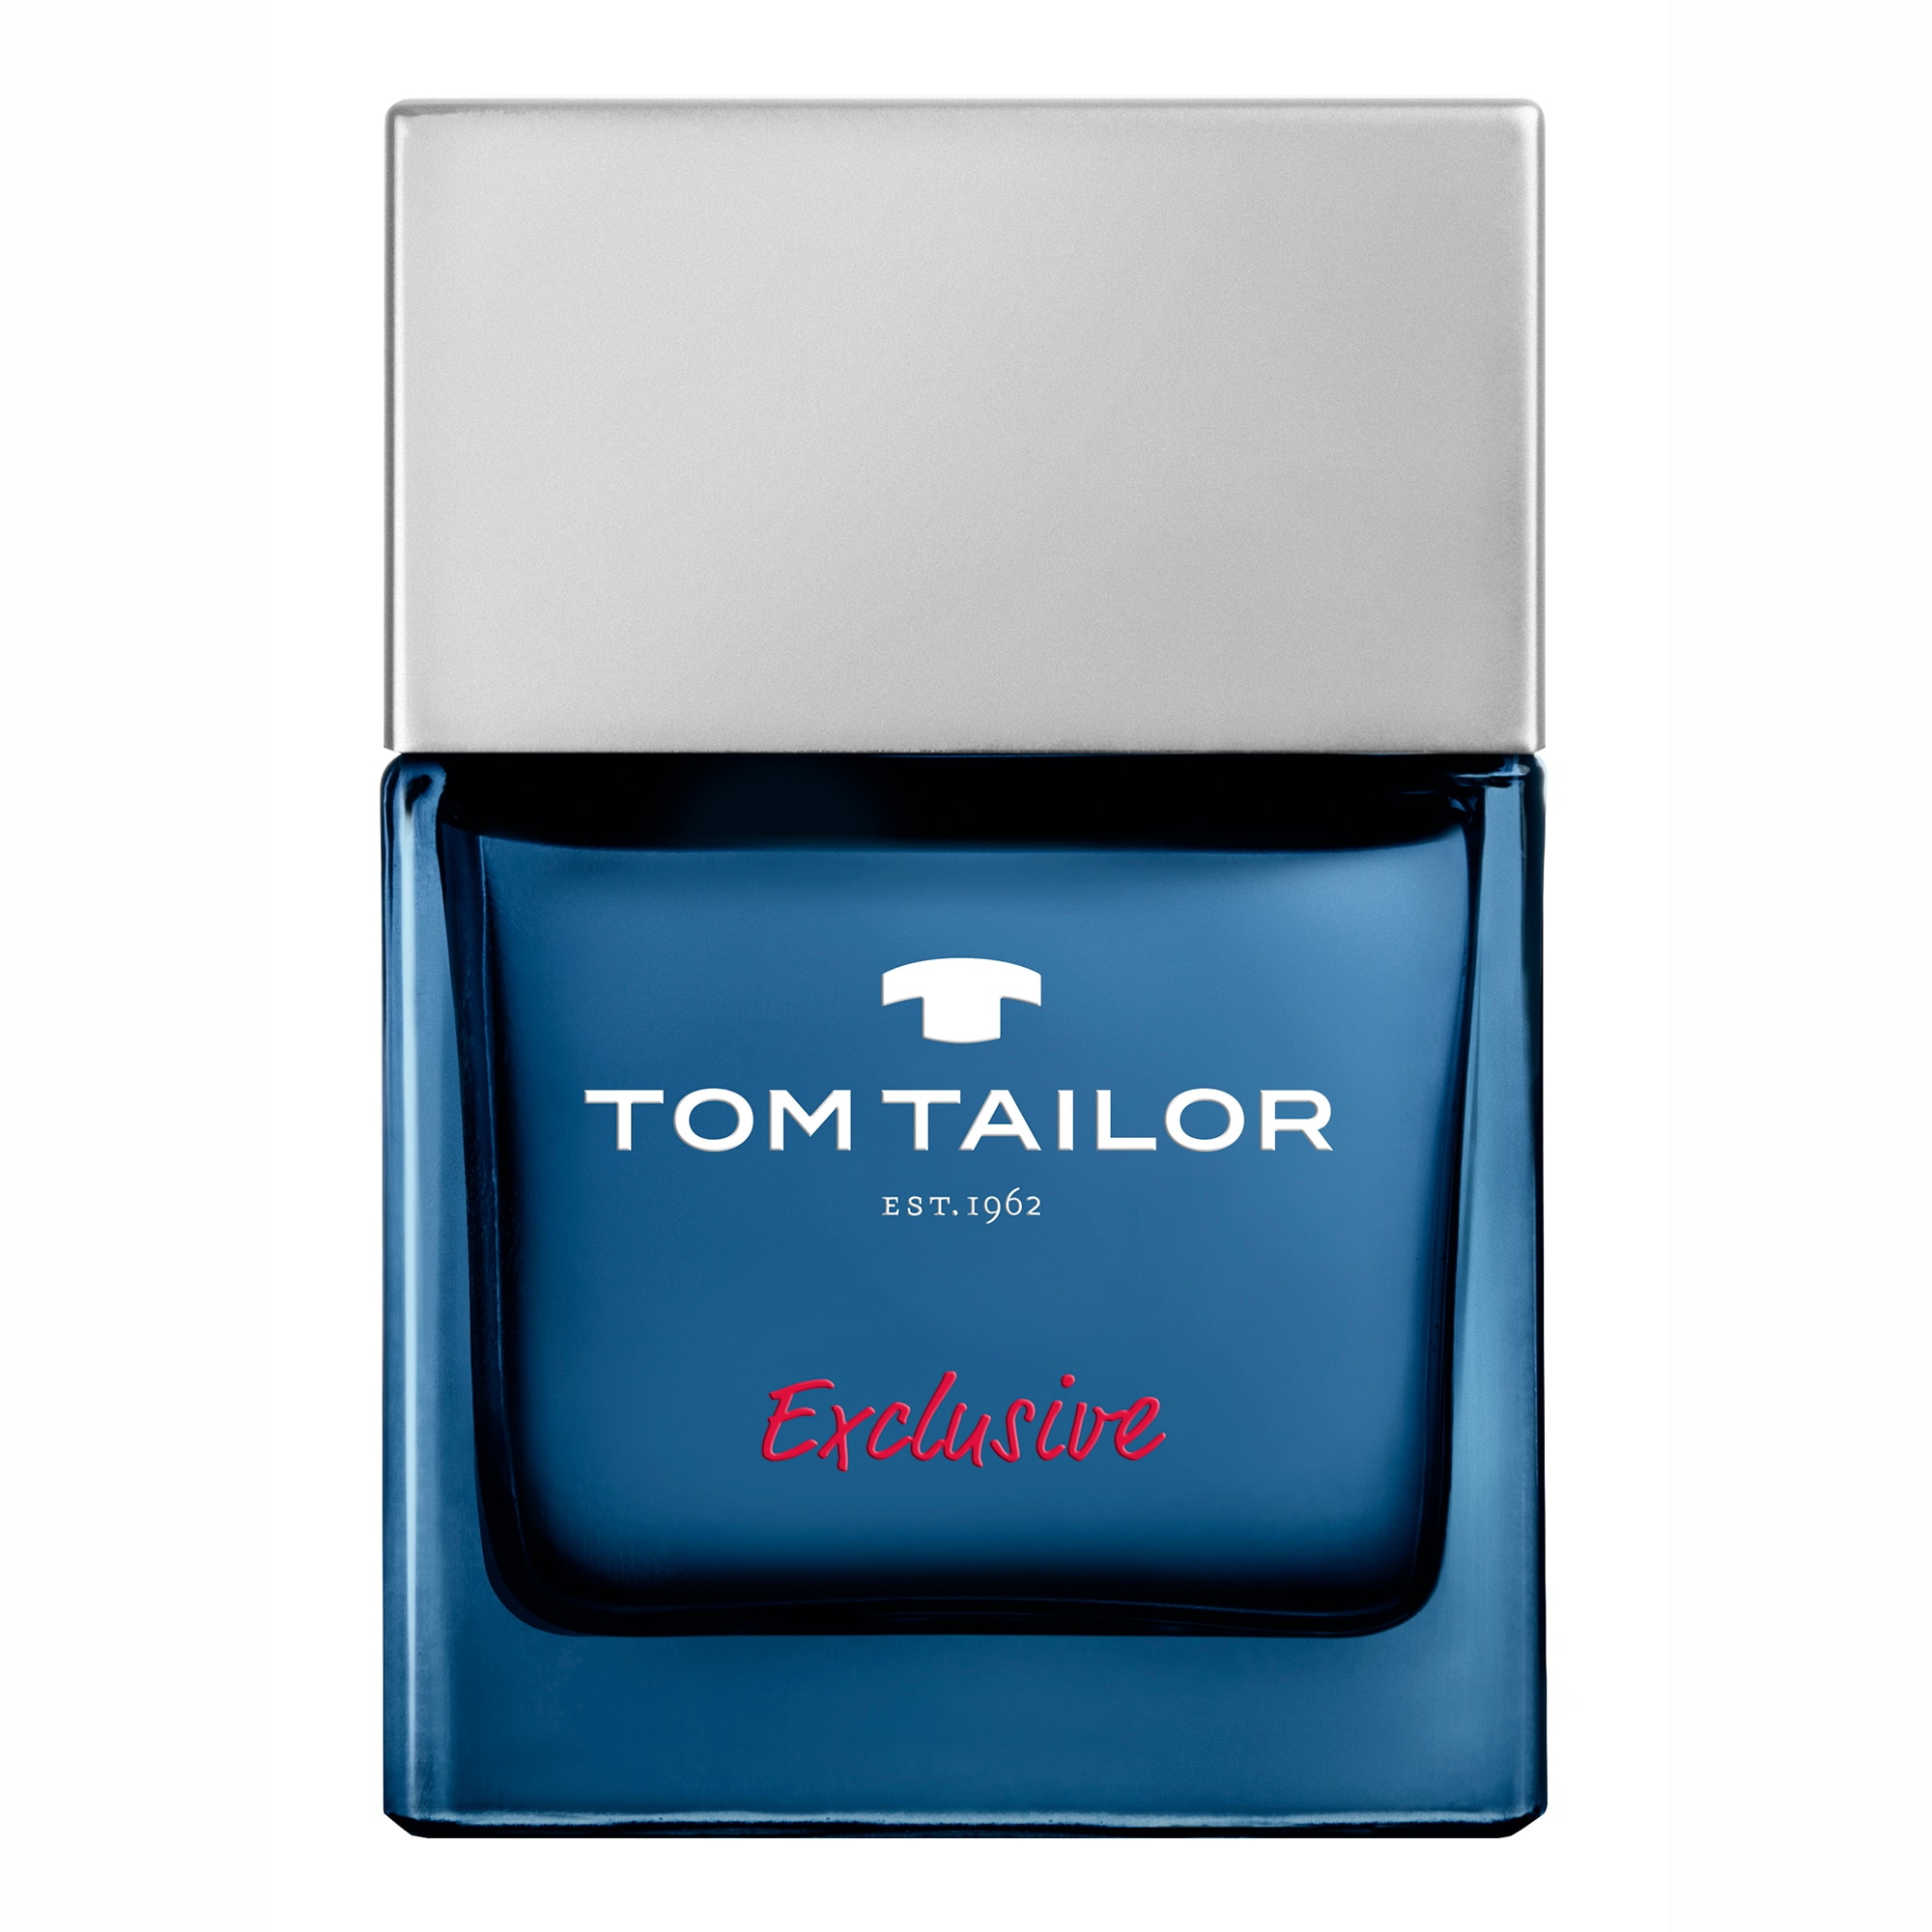 Том тейлор парфюм. Tom Tailor туалетная вода мужская. Tom Tailor Exclusive man. Tom Tailor est 1962. Туалетная вода Tom Tailor BODYTALK man.